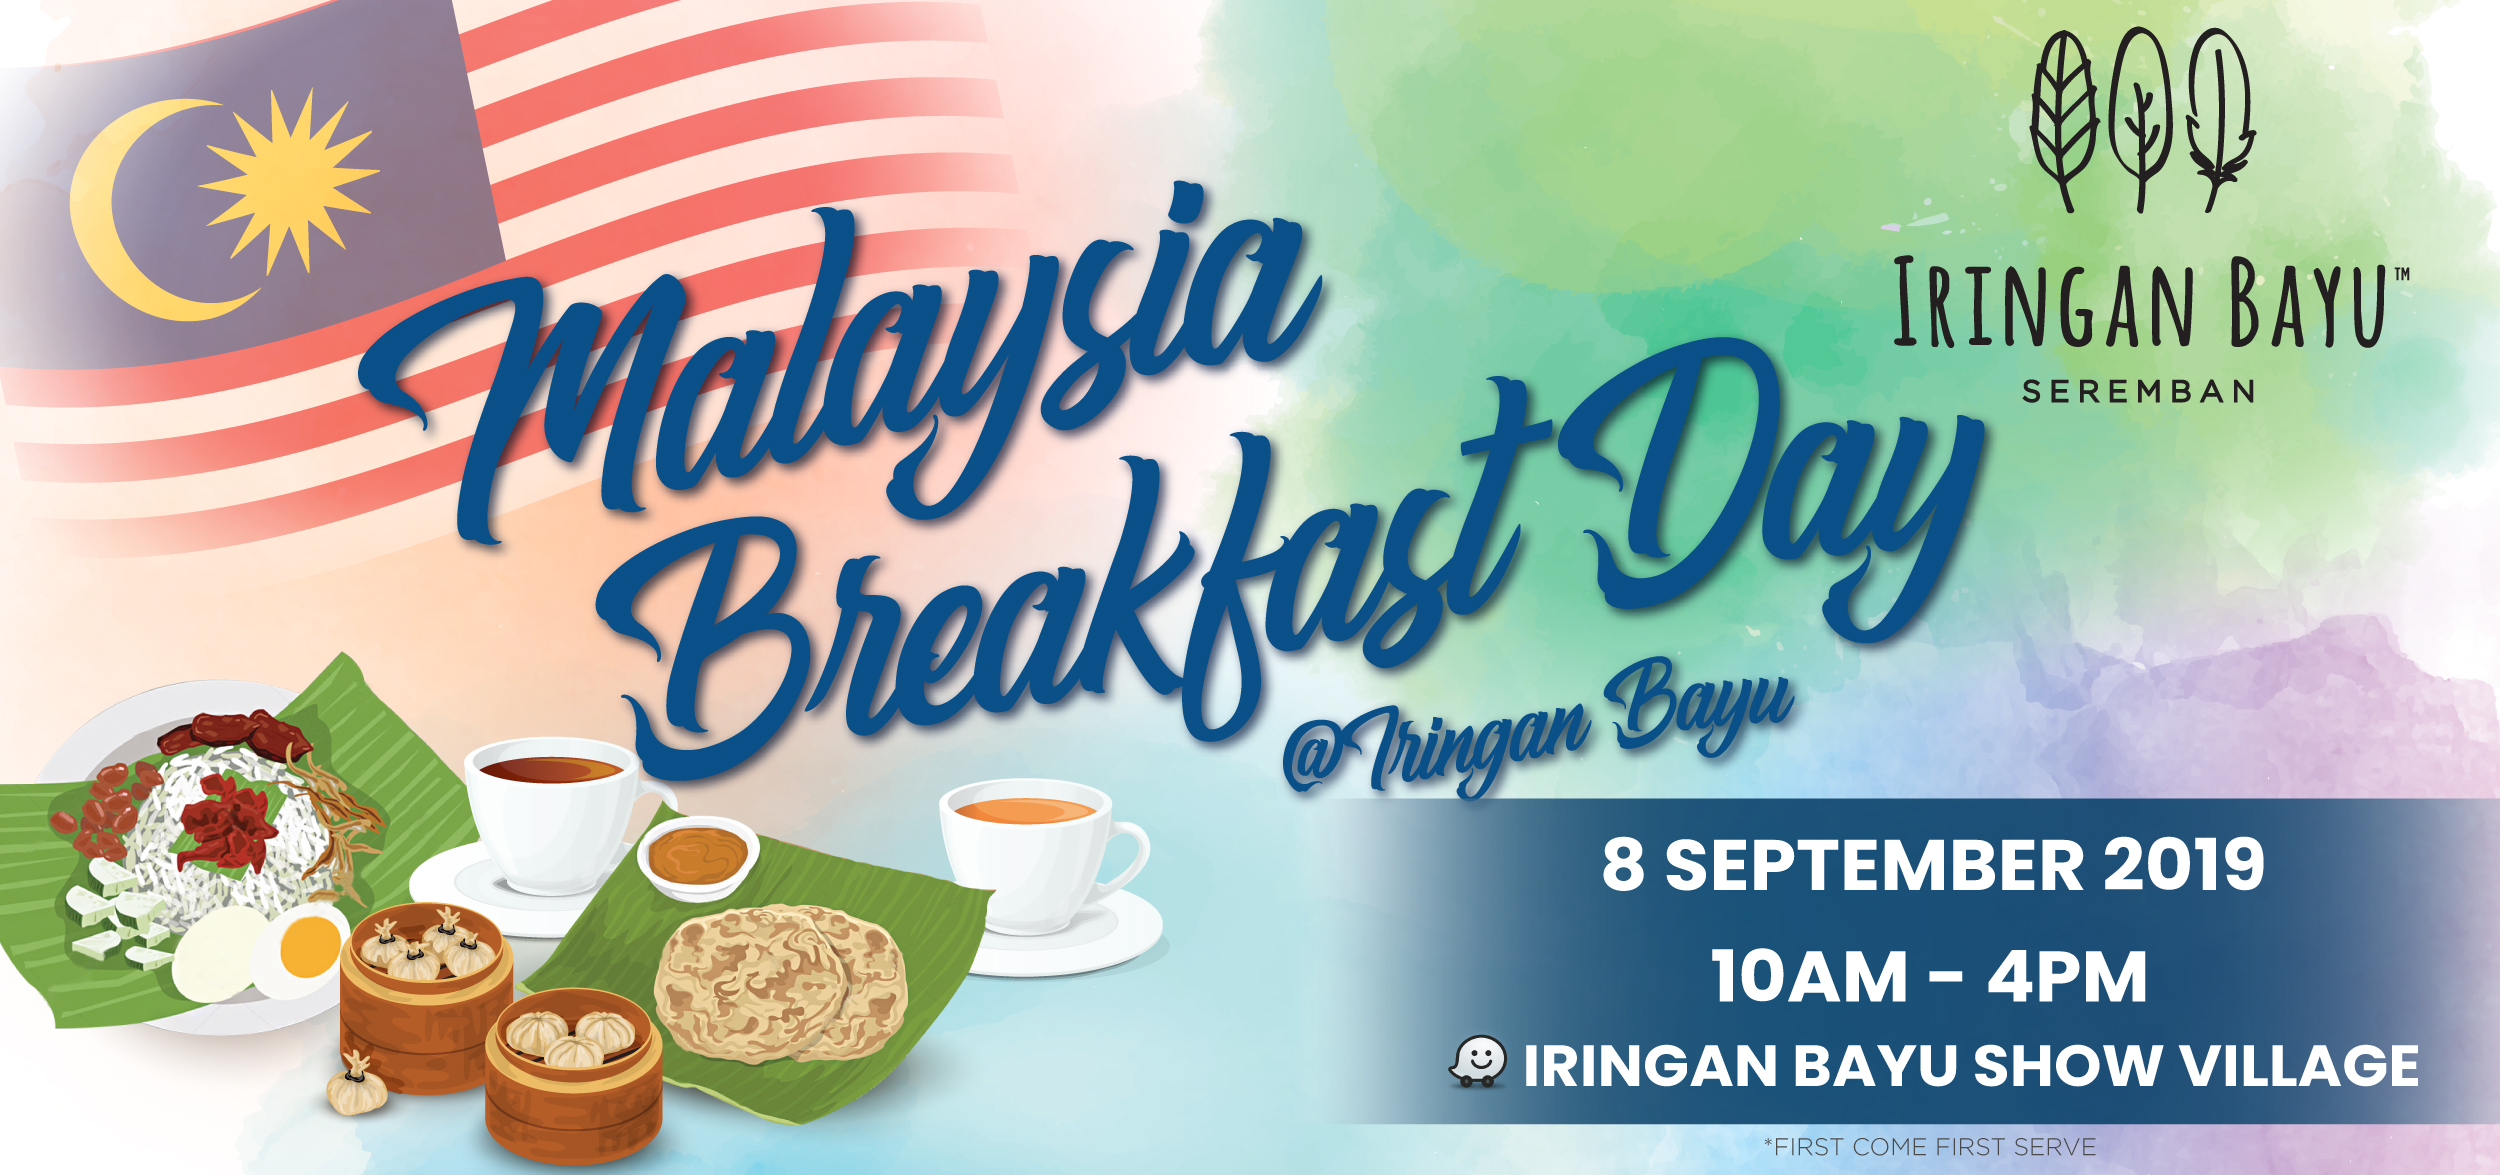 Malaysia Breakfast Day @ Iringan Bayu